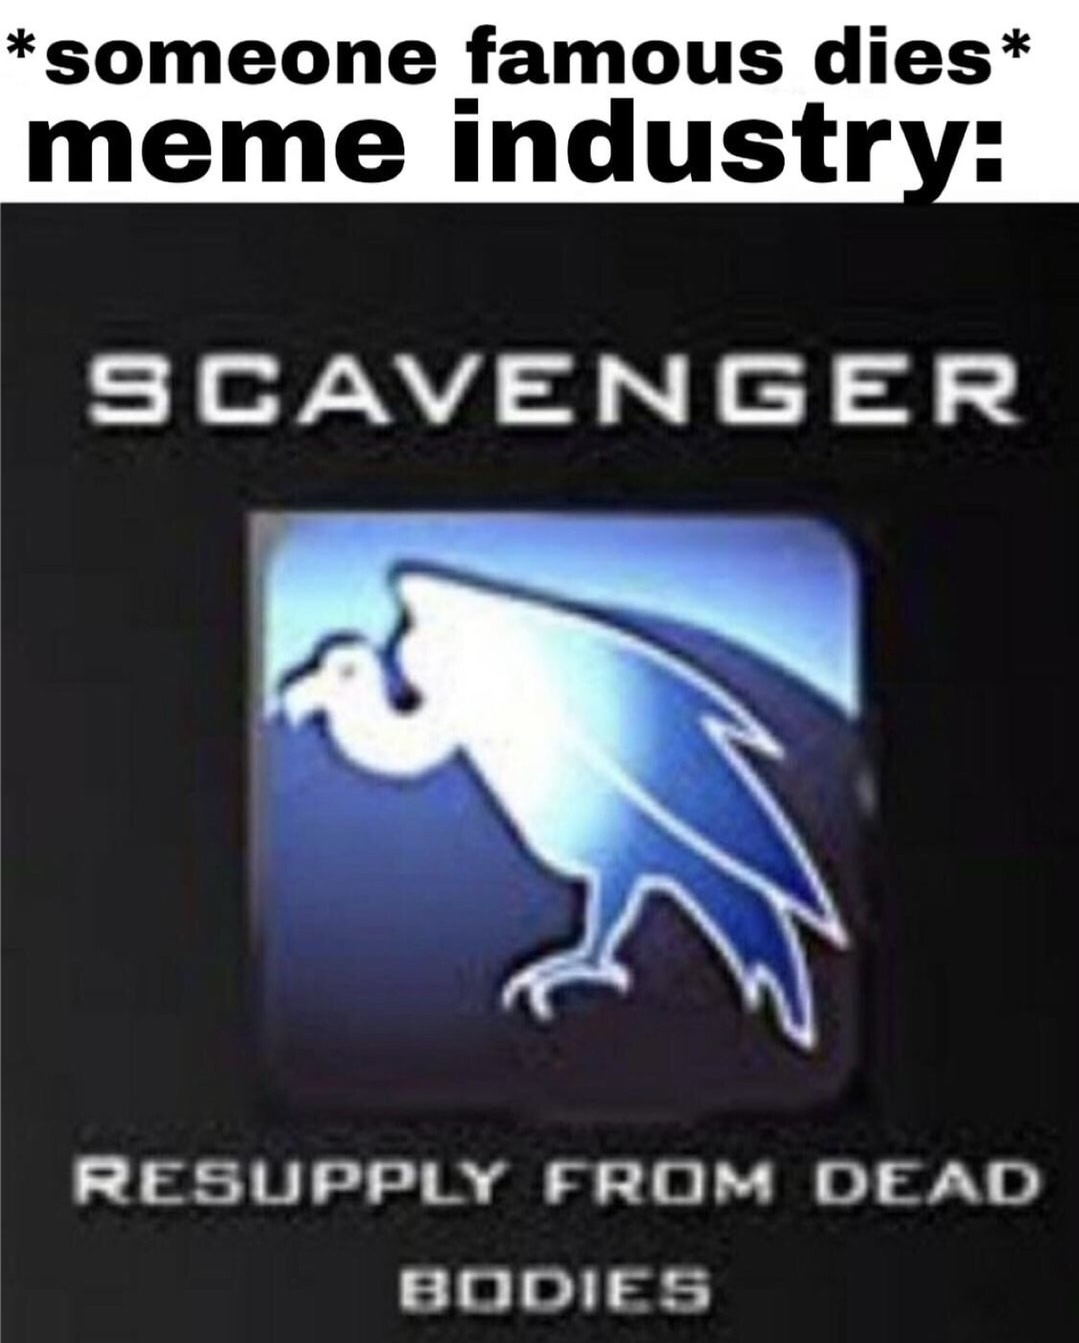 scavenger perk mw3 - someone famous dies meme industry Scavenger Resupply From Dead Bodies